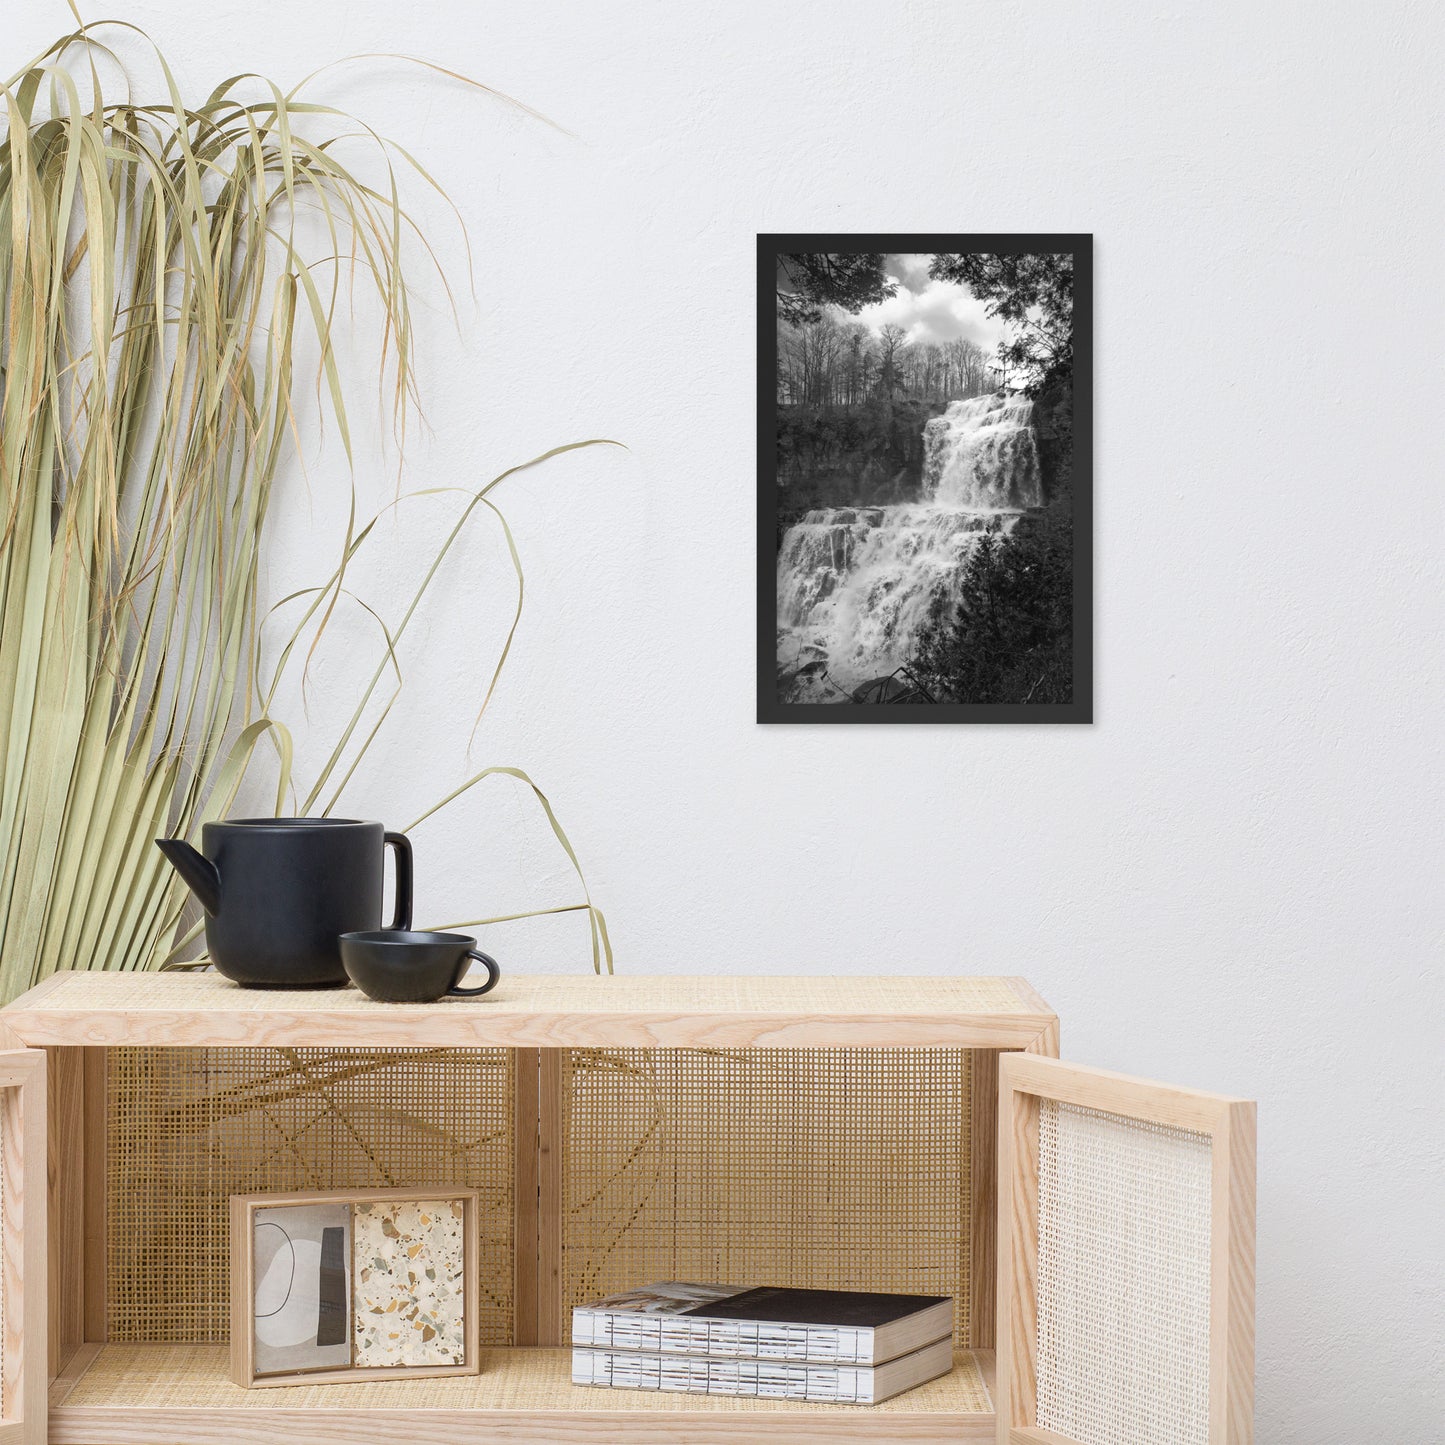 Chittenango Waterfall in Black and White Framed Photo Wall Art Prints